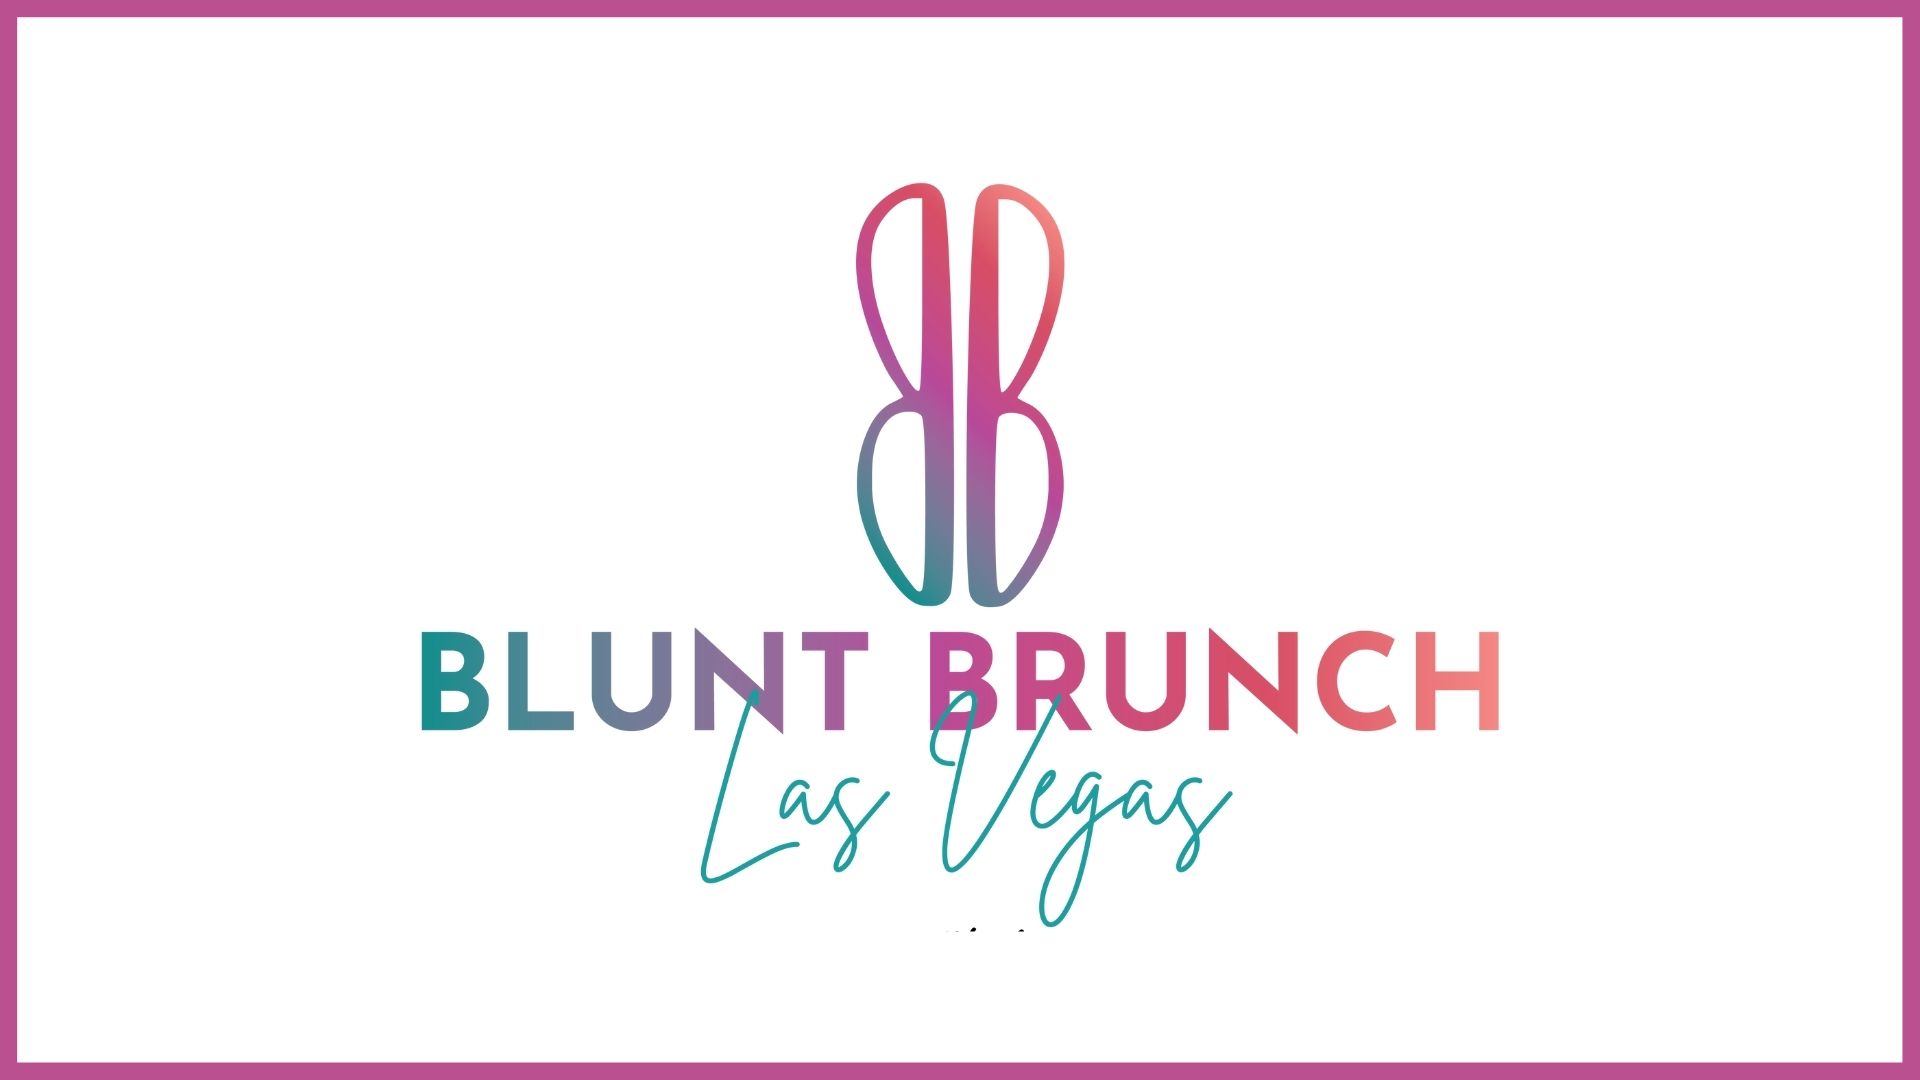 Blunt Brunch Las Vegas Social